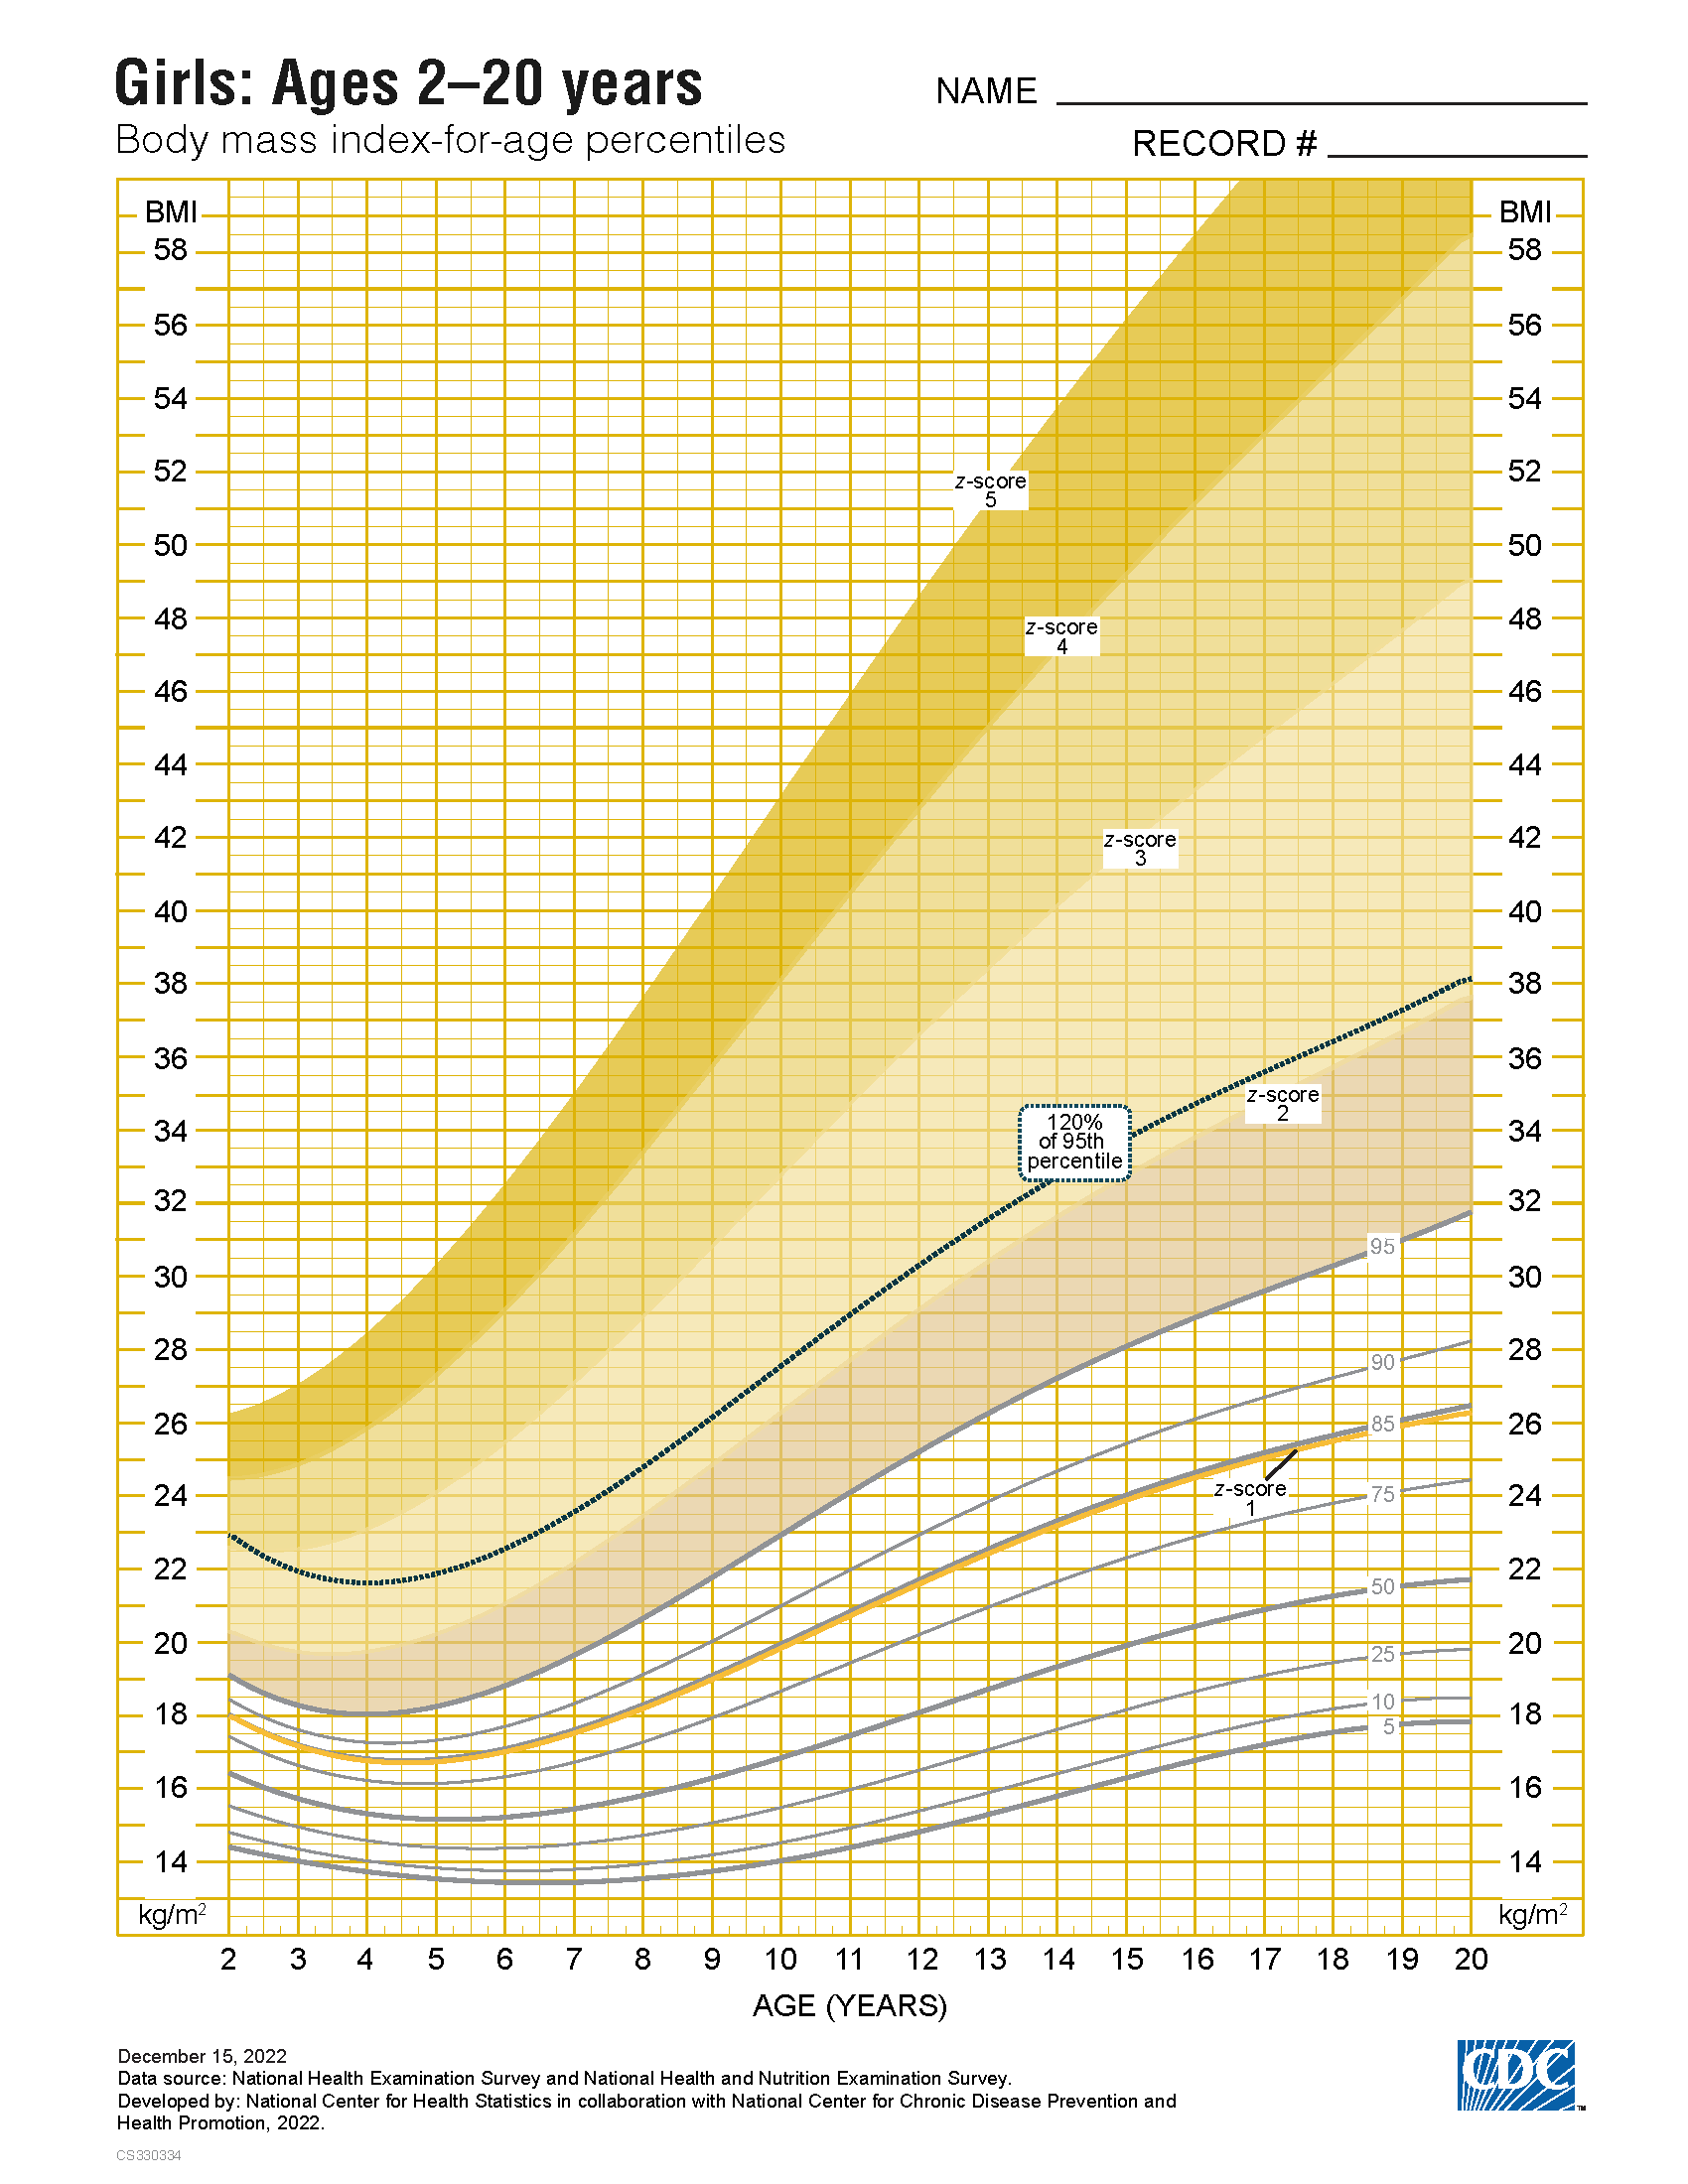 BMI-Age-percentiles-GIRLS-Z-Scores